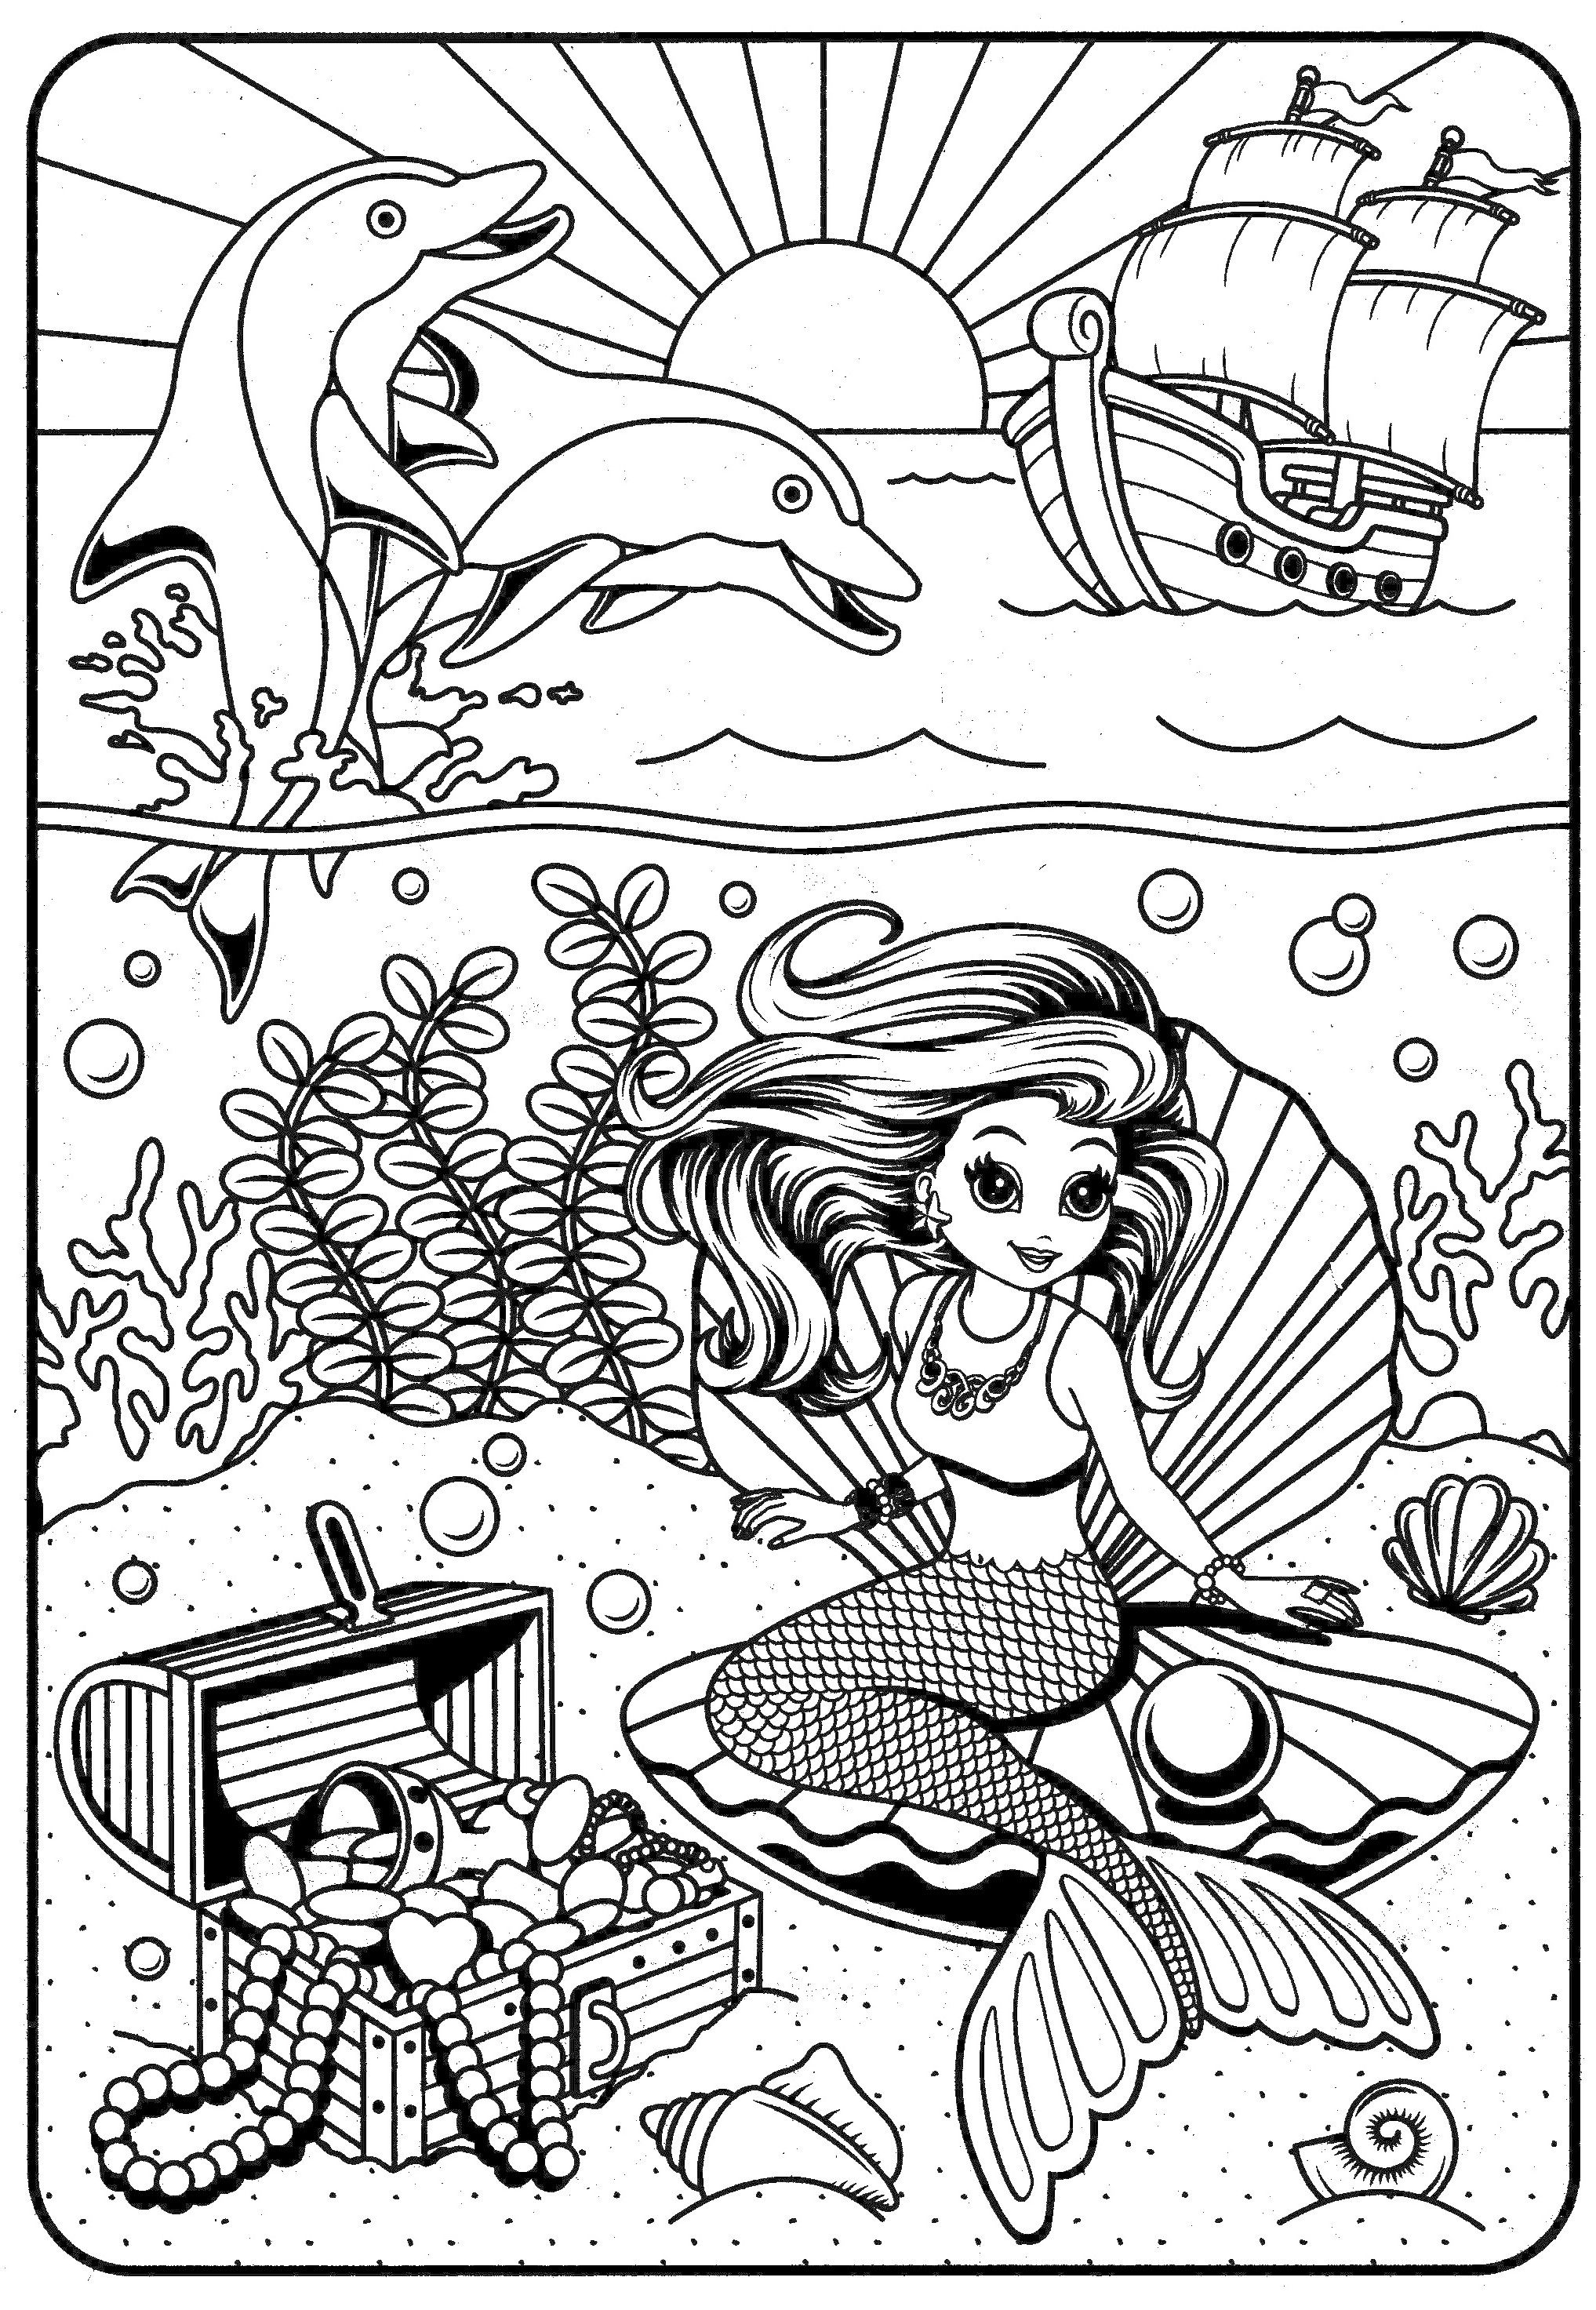 Lisa frank coloring pages lisa frank coloring books space coloring pages mermaid coloring pages